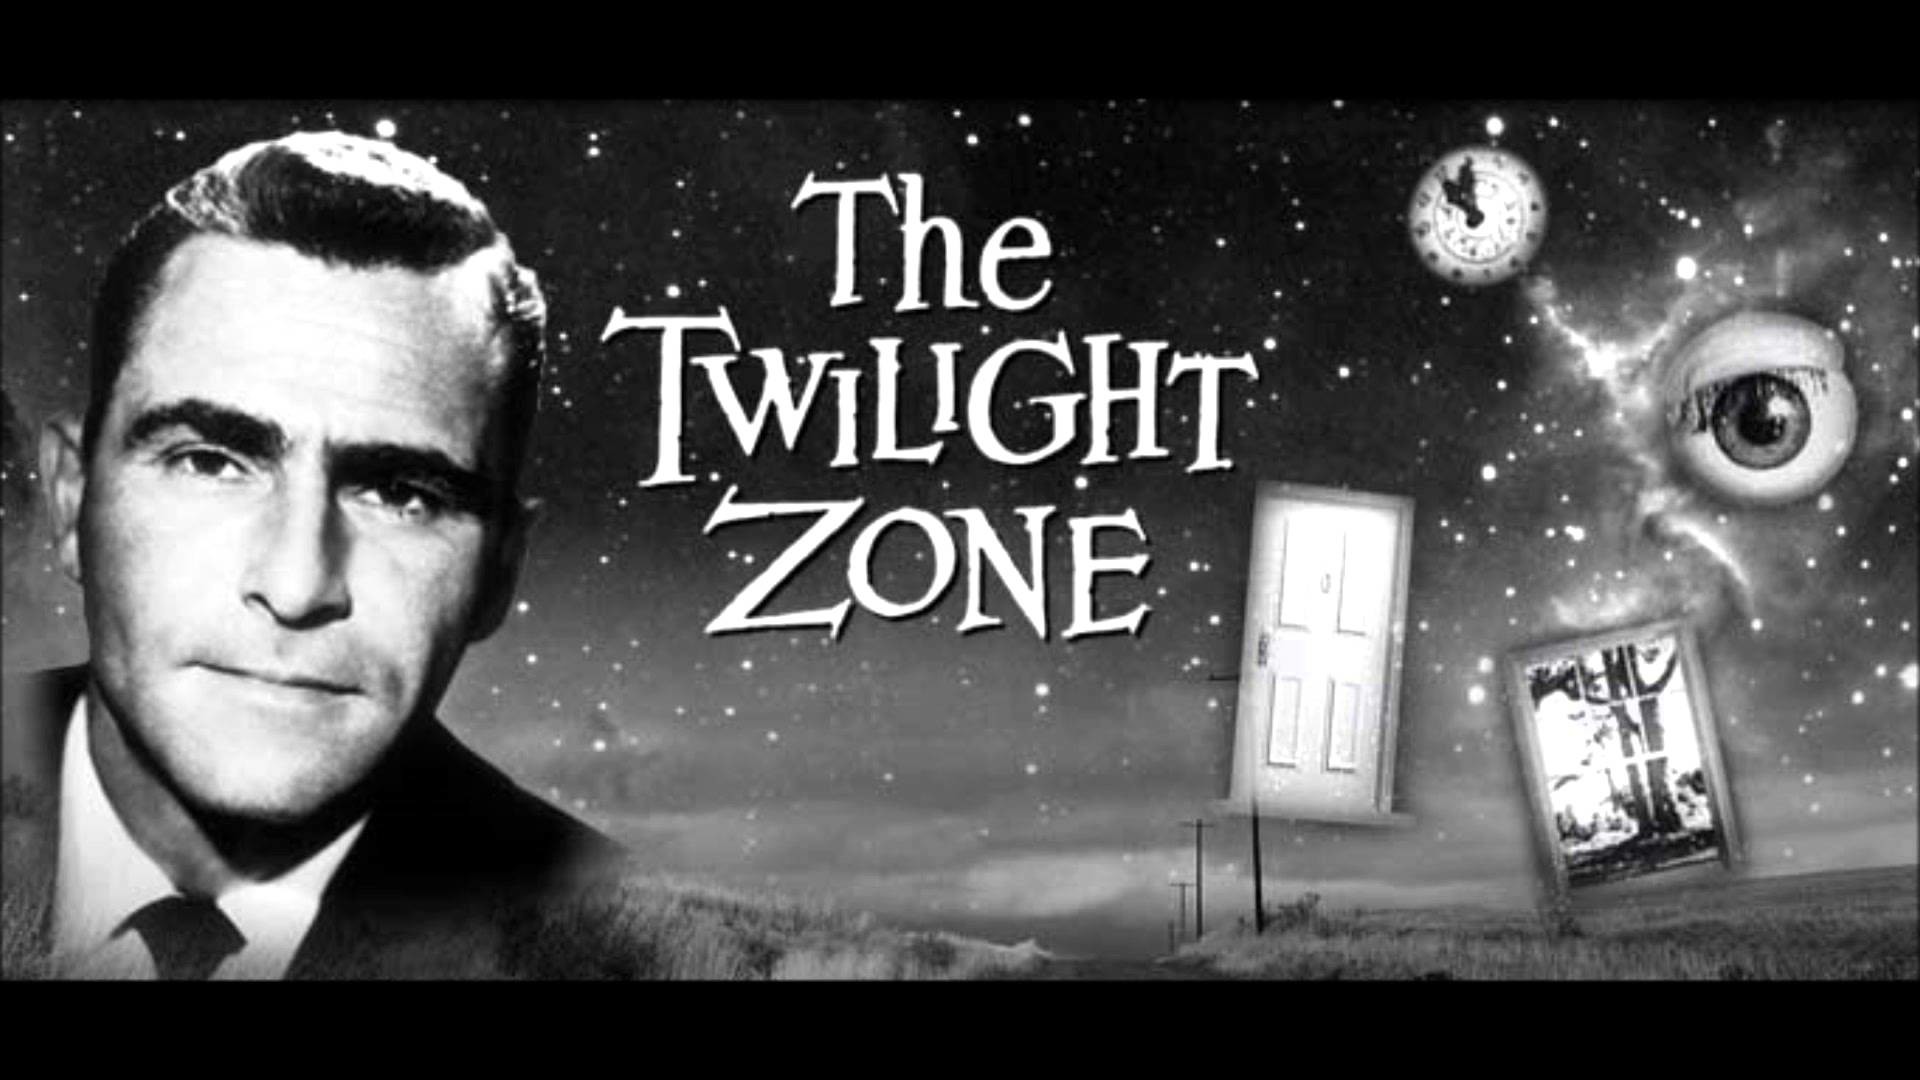 1920x1080 Theme The Twilight Zone